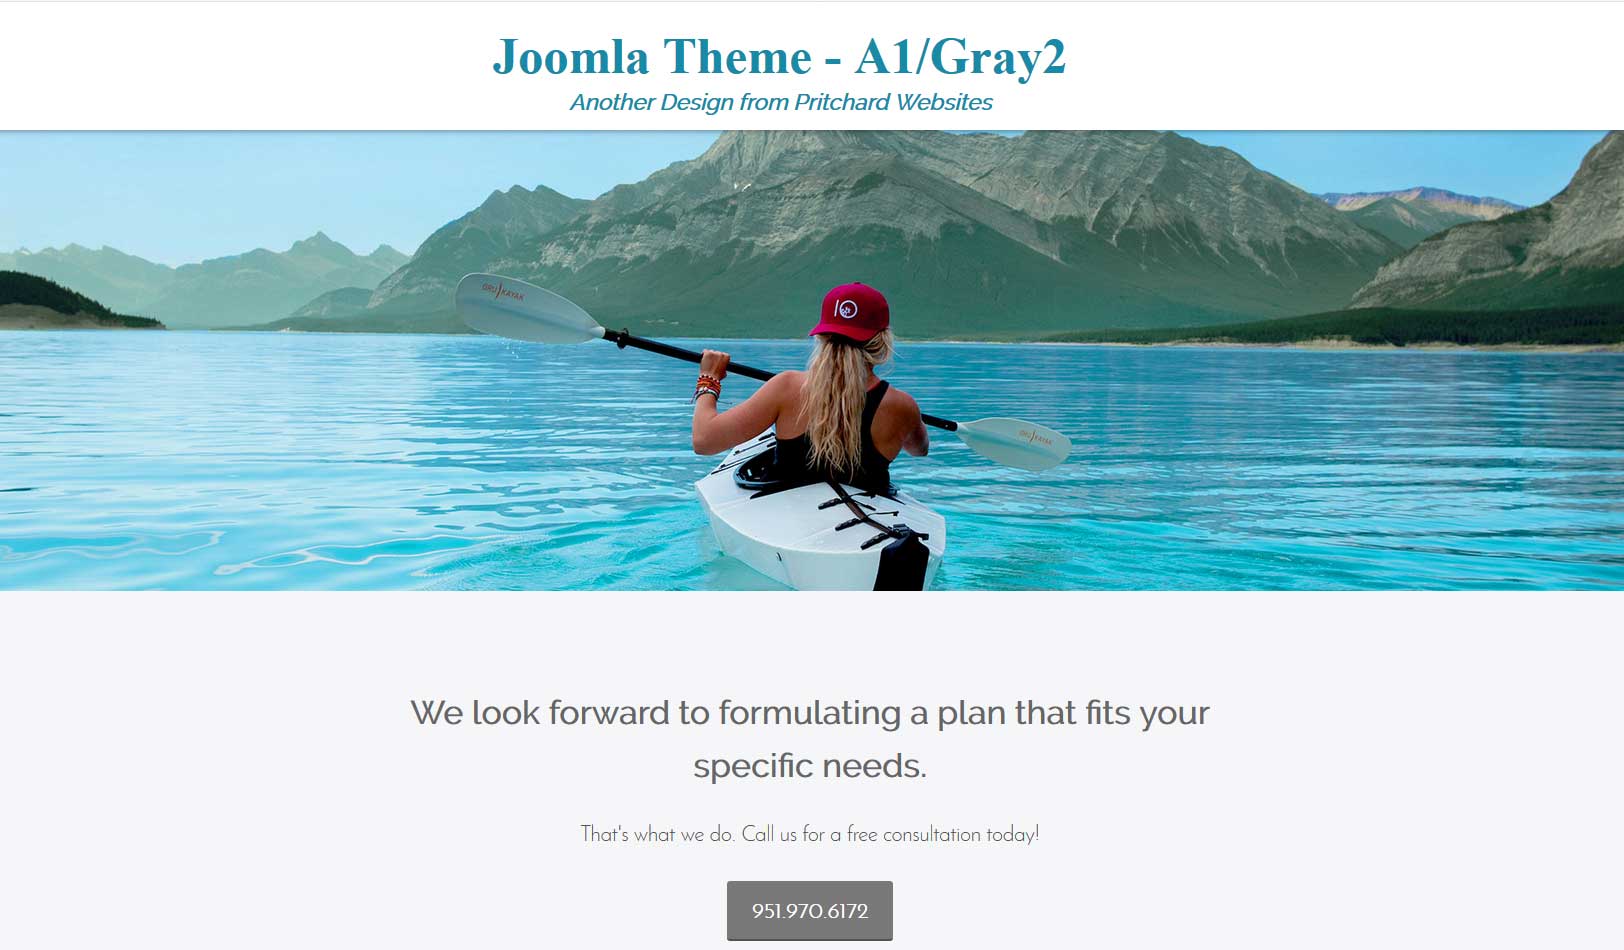 images/Portfolio-images/Our-Custom-Website-Themes/custom-website-design-A1-Gray2.jpg#joomlaImage://local-images/Portfolio-images/Our-Custom-Website-Themes/custom-website-design-A1-Gray2.jpg?width=1624&height=950